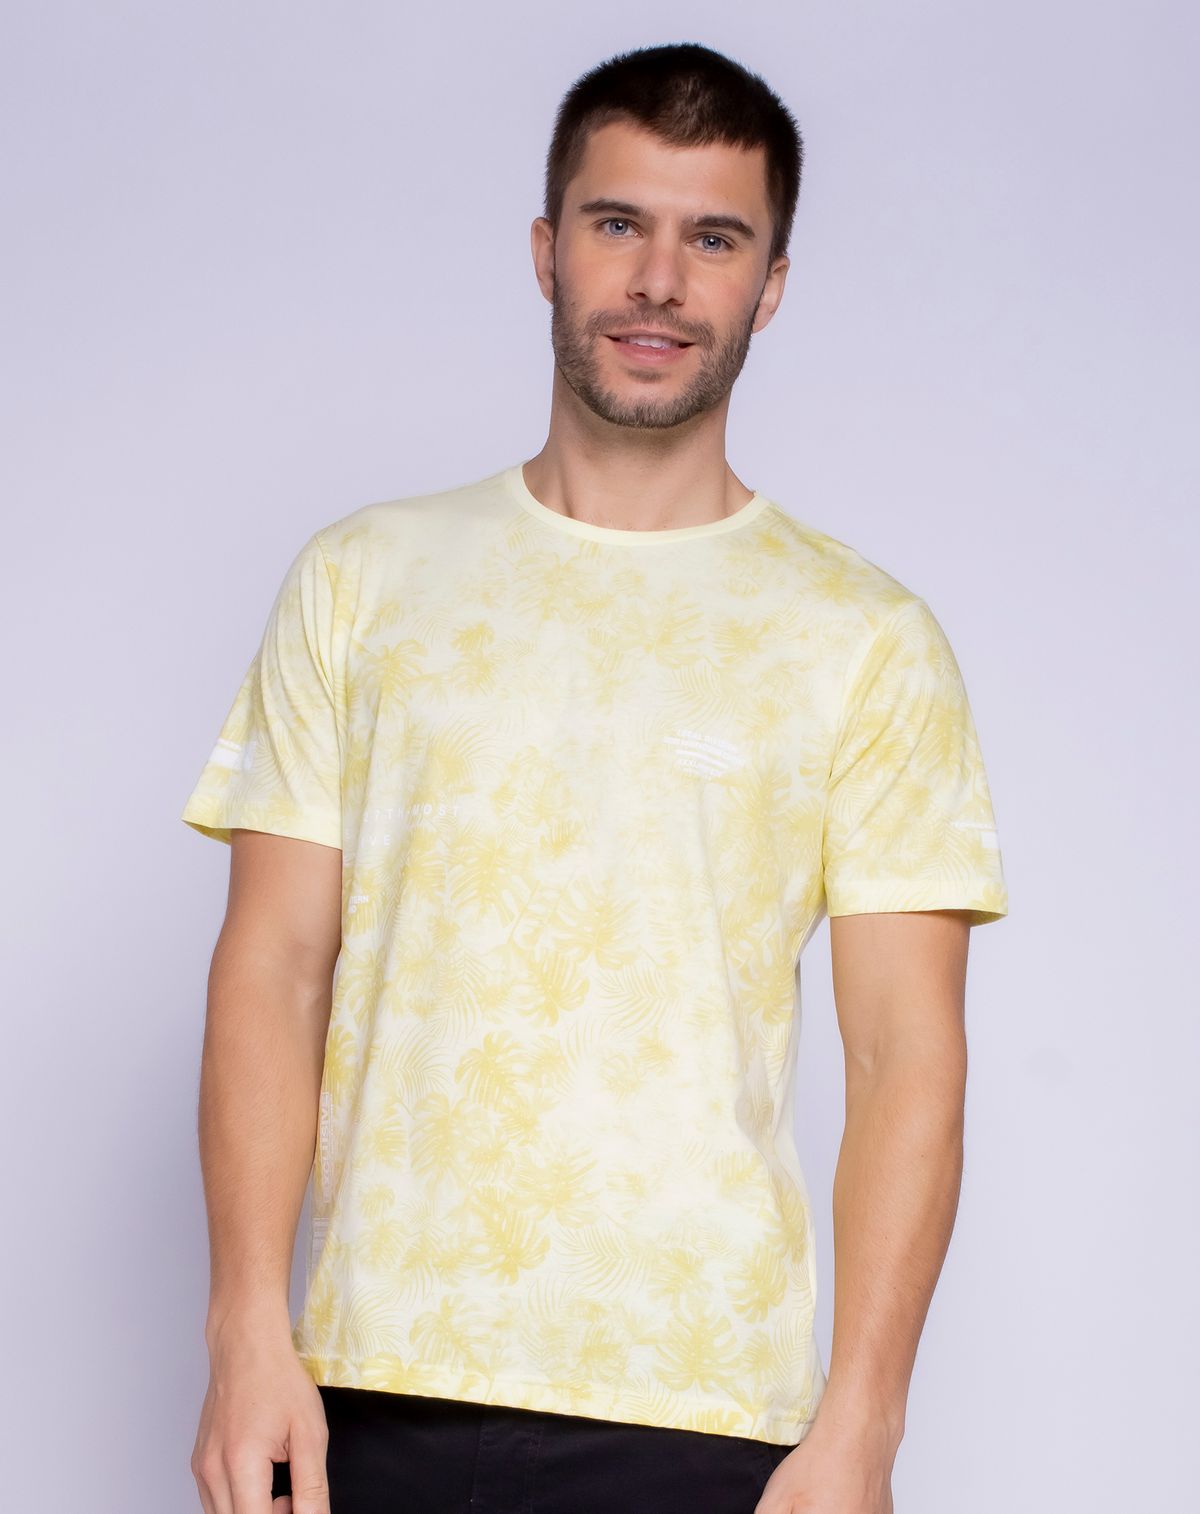 607850001-camiseta-manga-curta-masculina-estampa-tropical-amarelo-p-c81